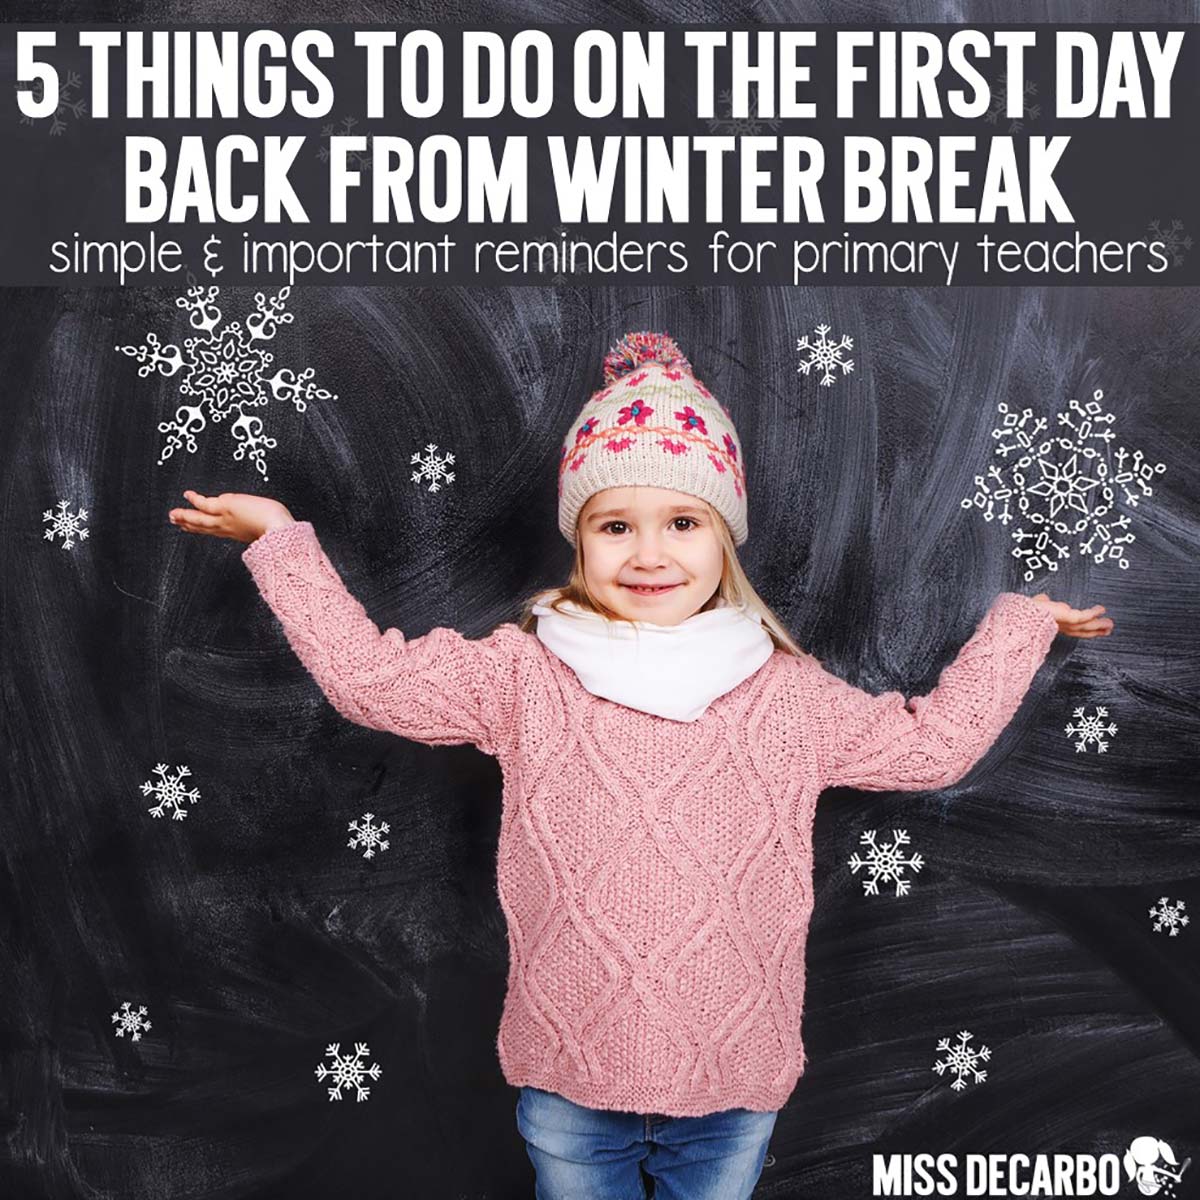 Teacher Tips for the First Day Back From Winter Break